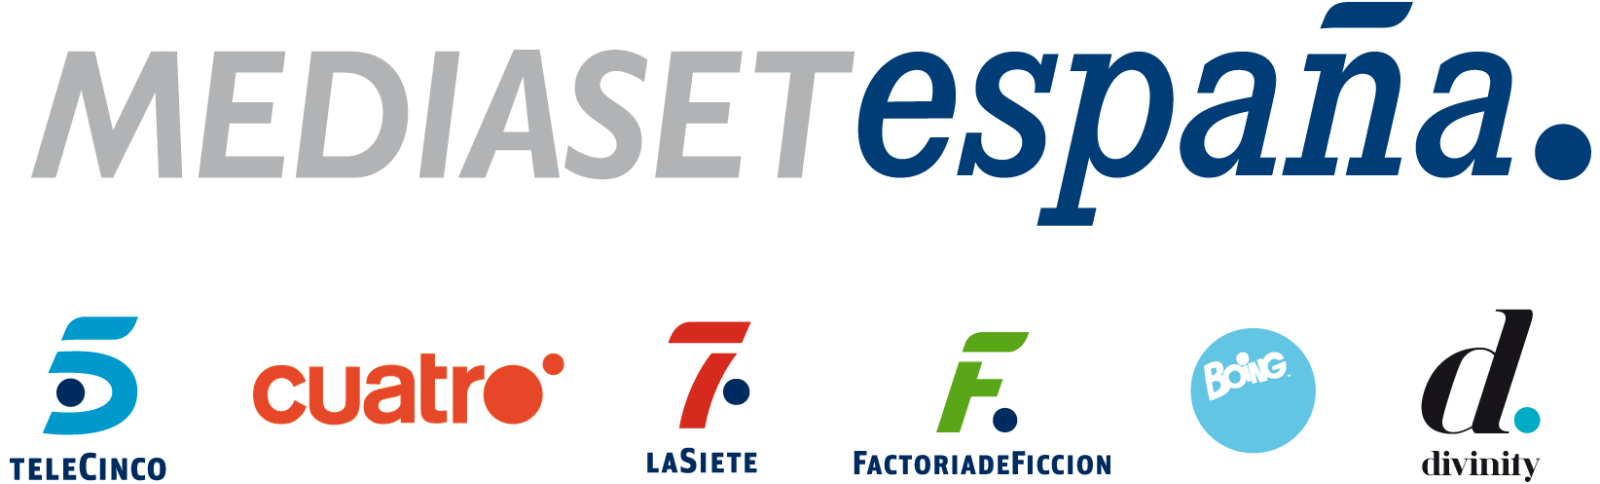 Mediaset Logo - Mediaset España | Logopedia | FANDOM powered by Wikia